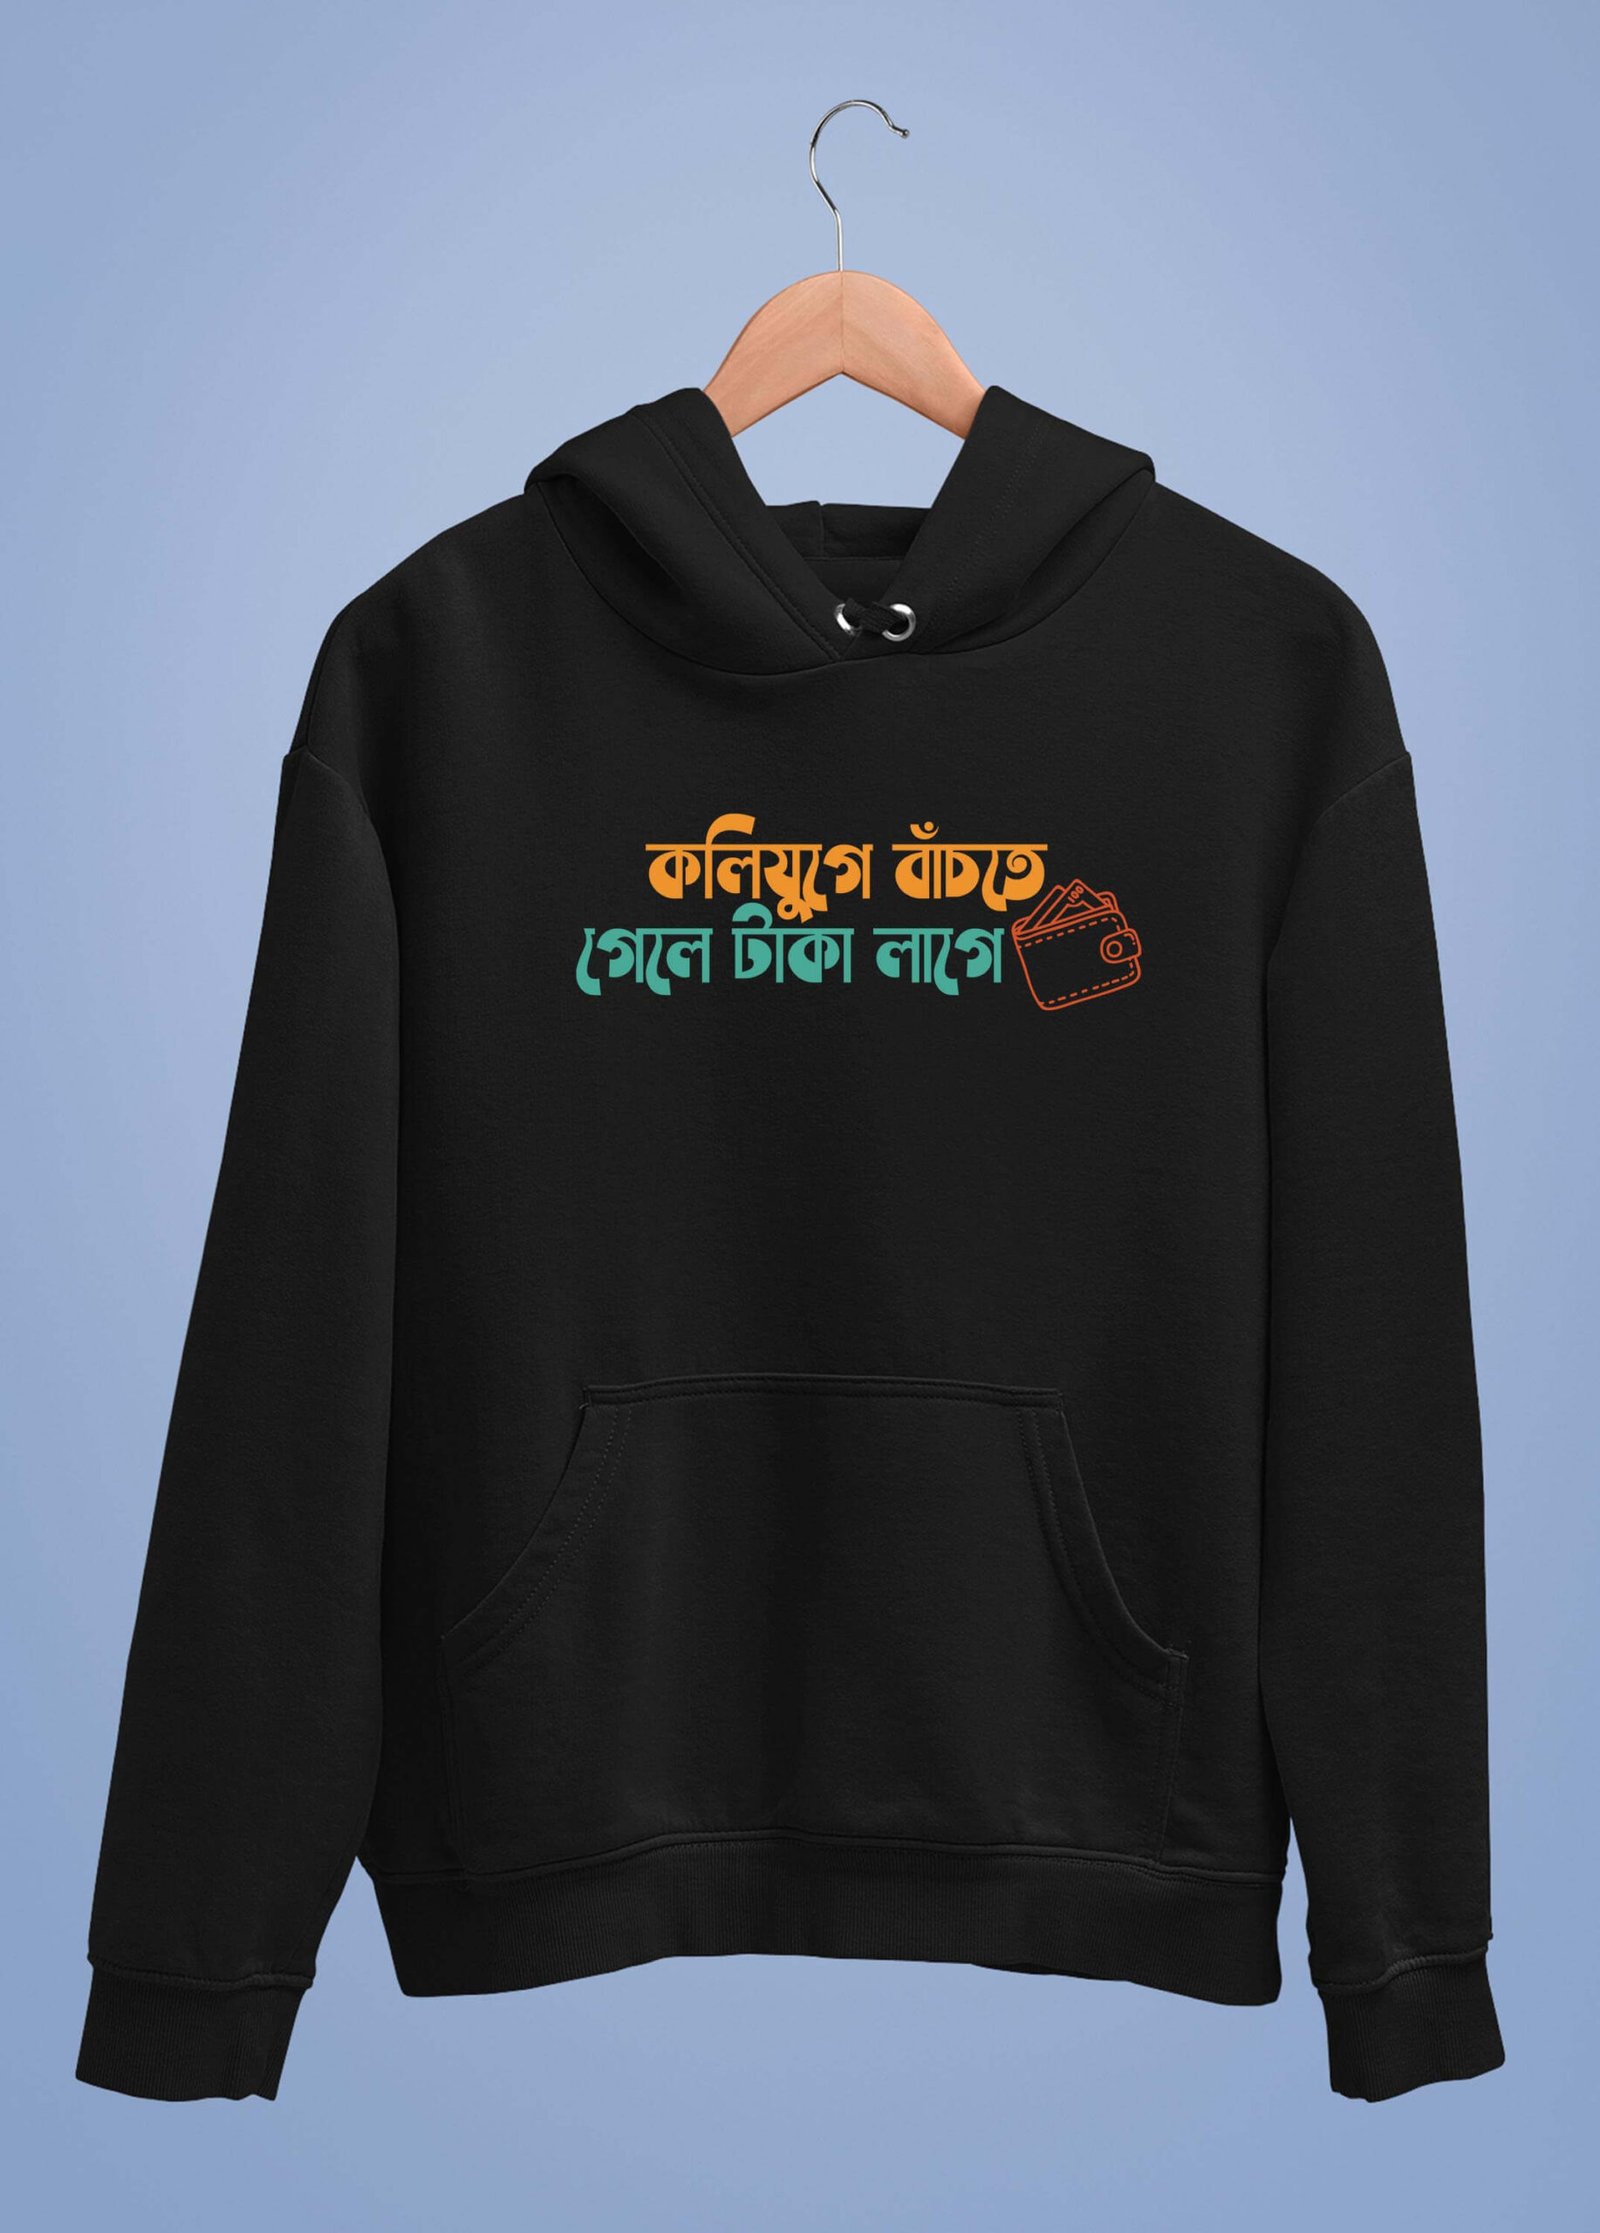 Kalijugae bachte gele taka lage hoodie (Kacher Manush Official Merchandise) (5 colour options available) No Exchange